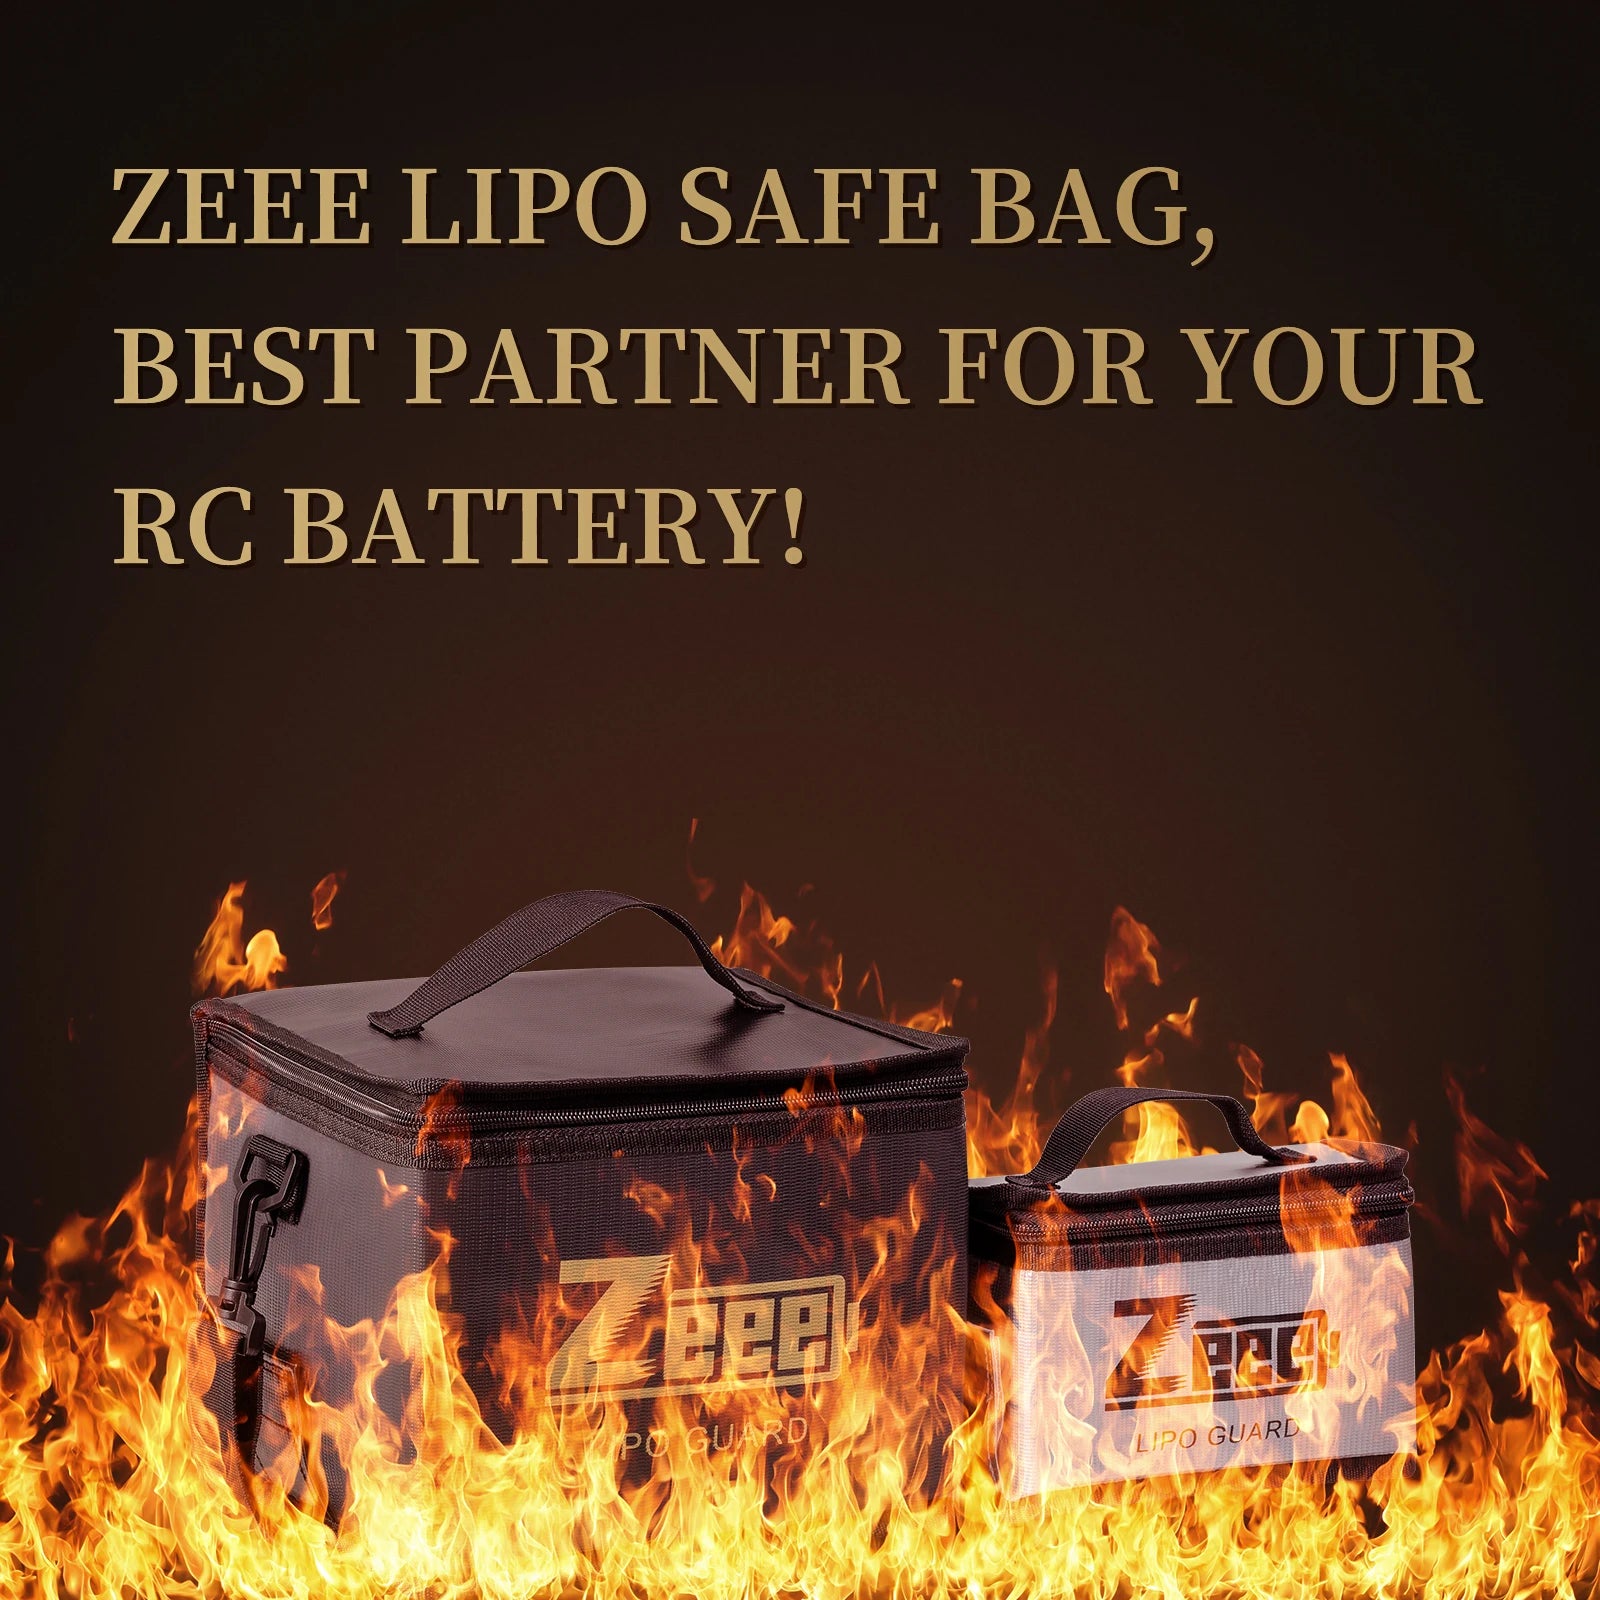 2 Size Zeee Lipo Bag, ZEEE LIPO SAFE BEST PARTNER FOR YOUR RC BATTERY